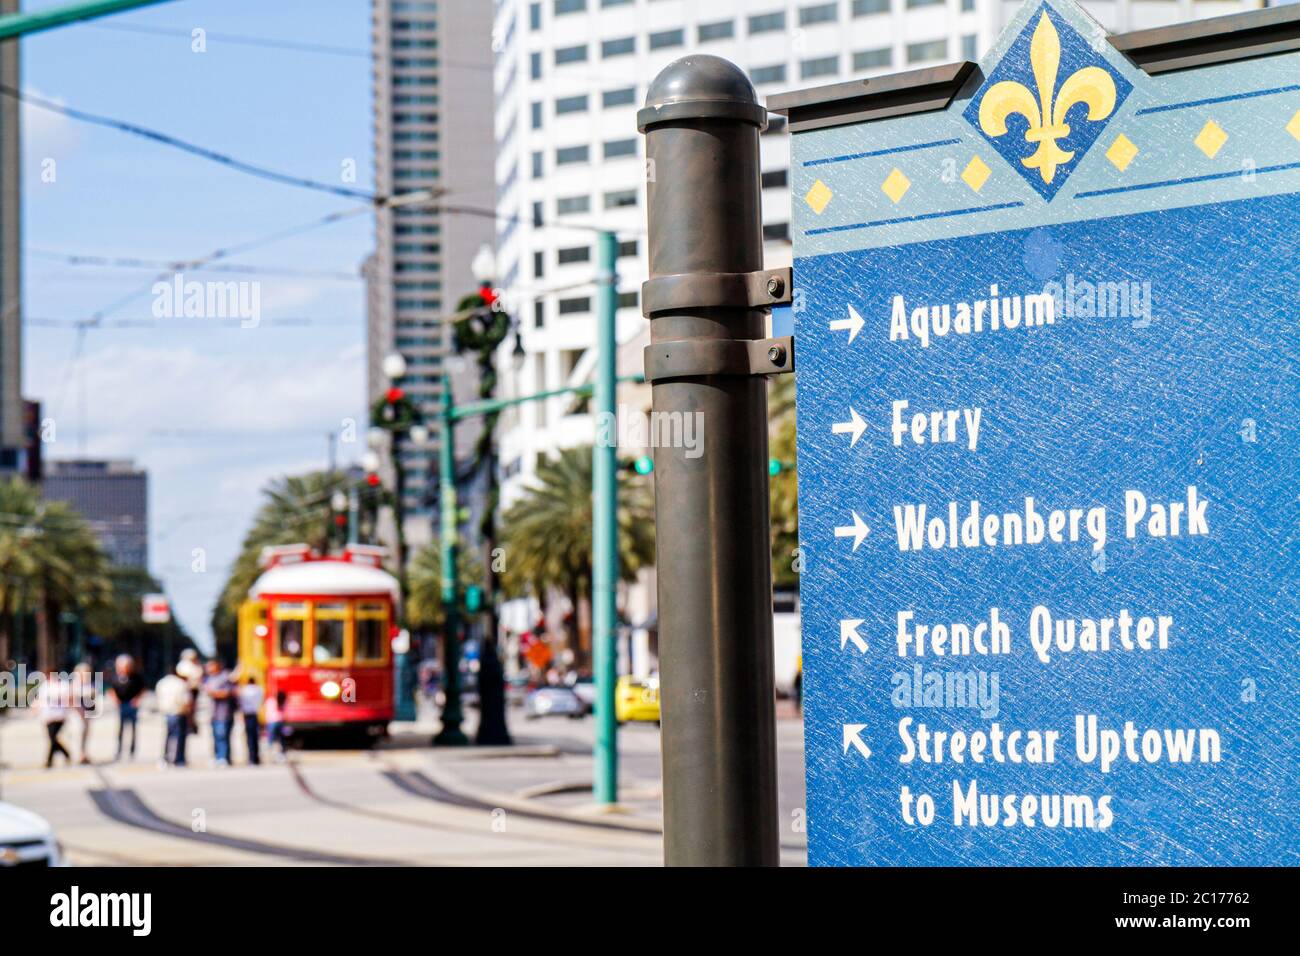 New Orleans Louisiana,Canal Street,street scene,direction sign,fleur de lis,information,arrow,city branding,Aquarium,Ferry,Uptown,Museums,Woldenberg P Stock Photo